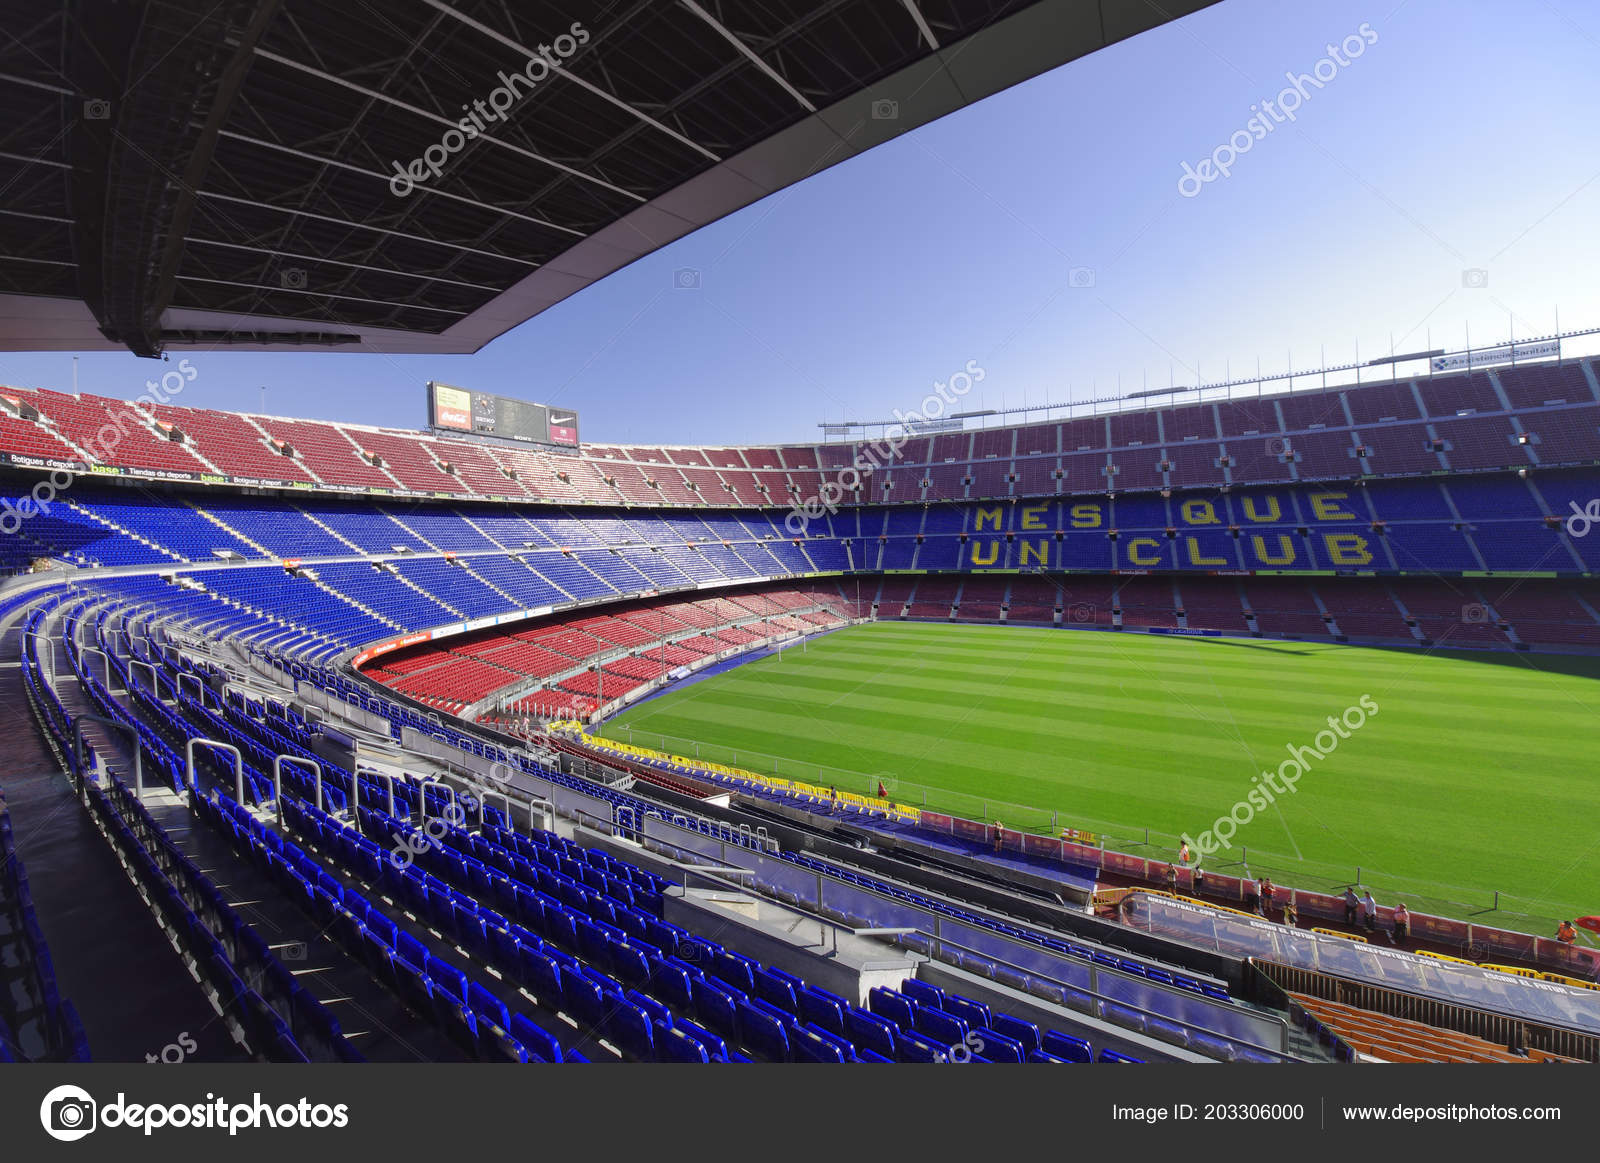 Soccer-specific Stadium - 1600x1163 Wallpaper - teahub.io